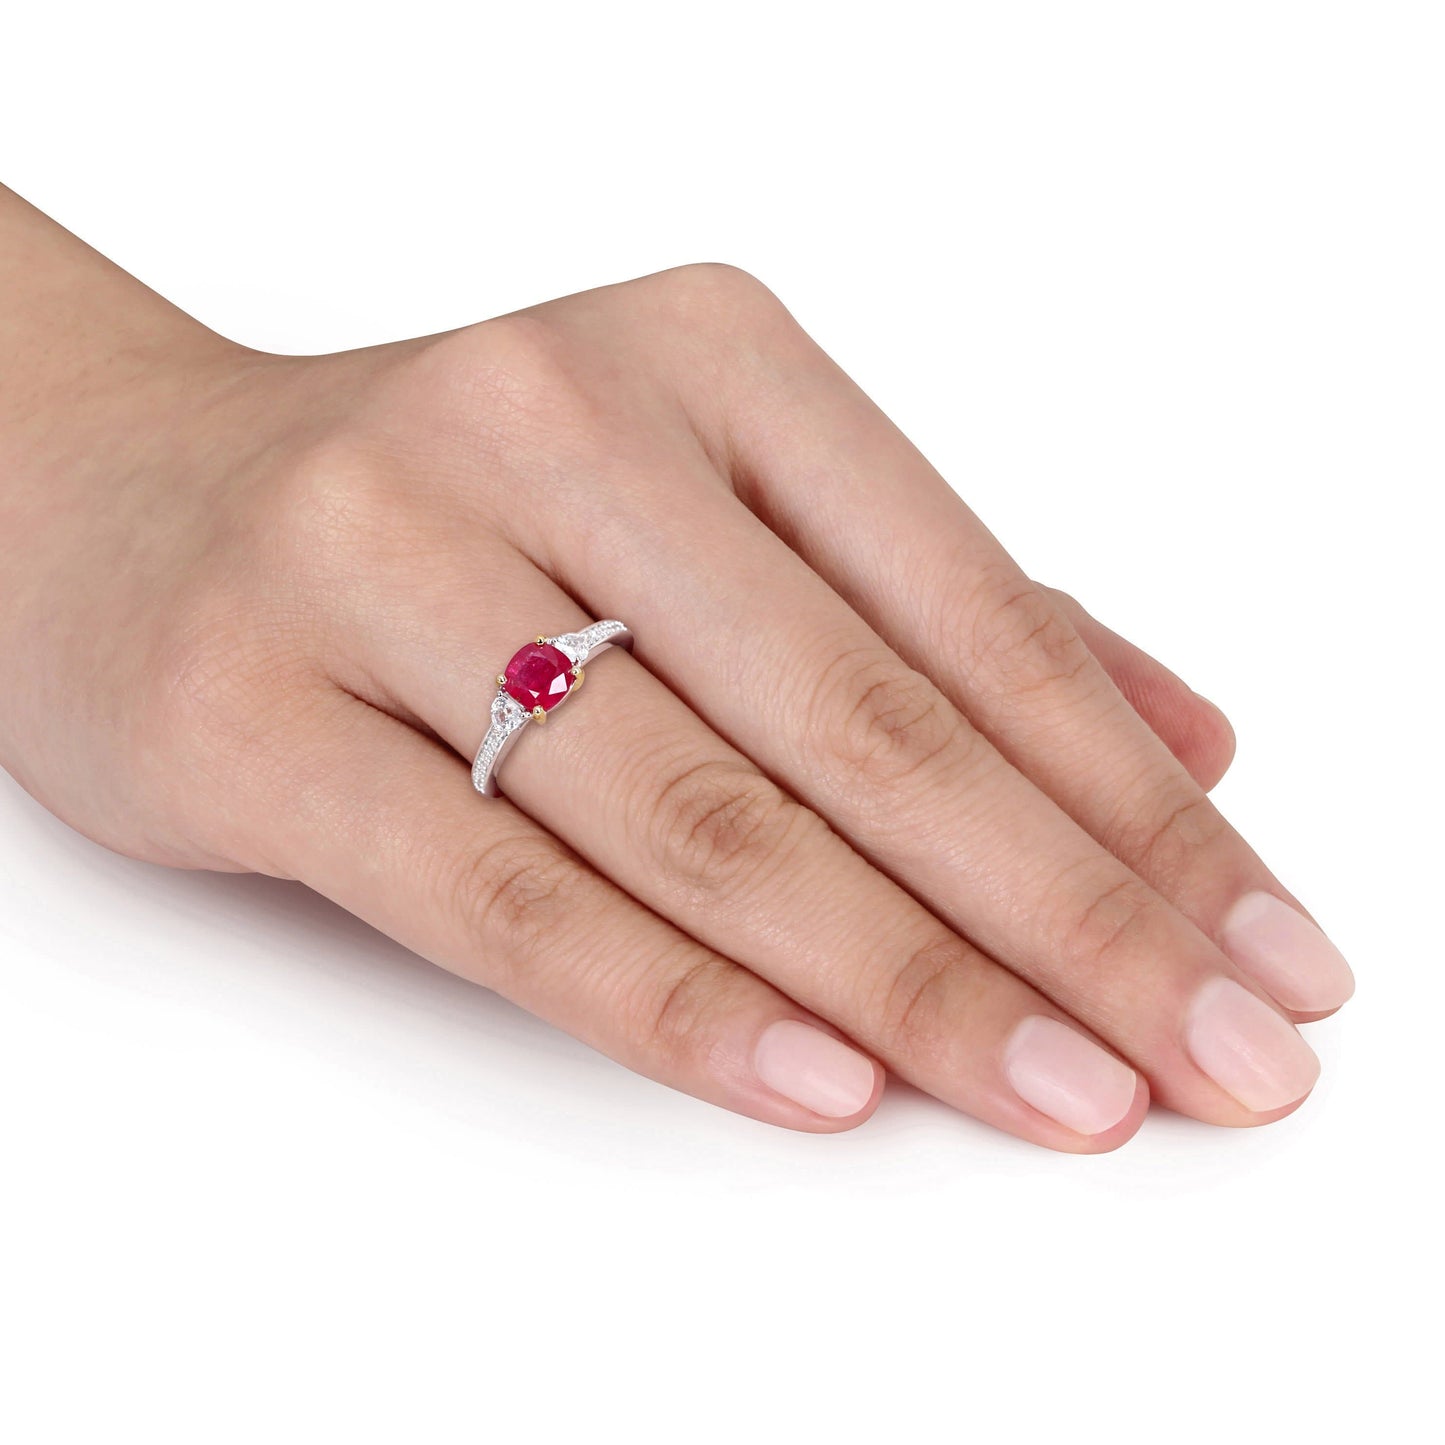 Sophia B Ruby, White Sapphire & Diamond 3-Stone Ring in 14k Two-Tone Gold